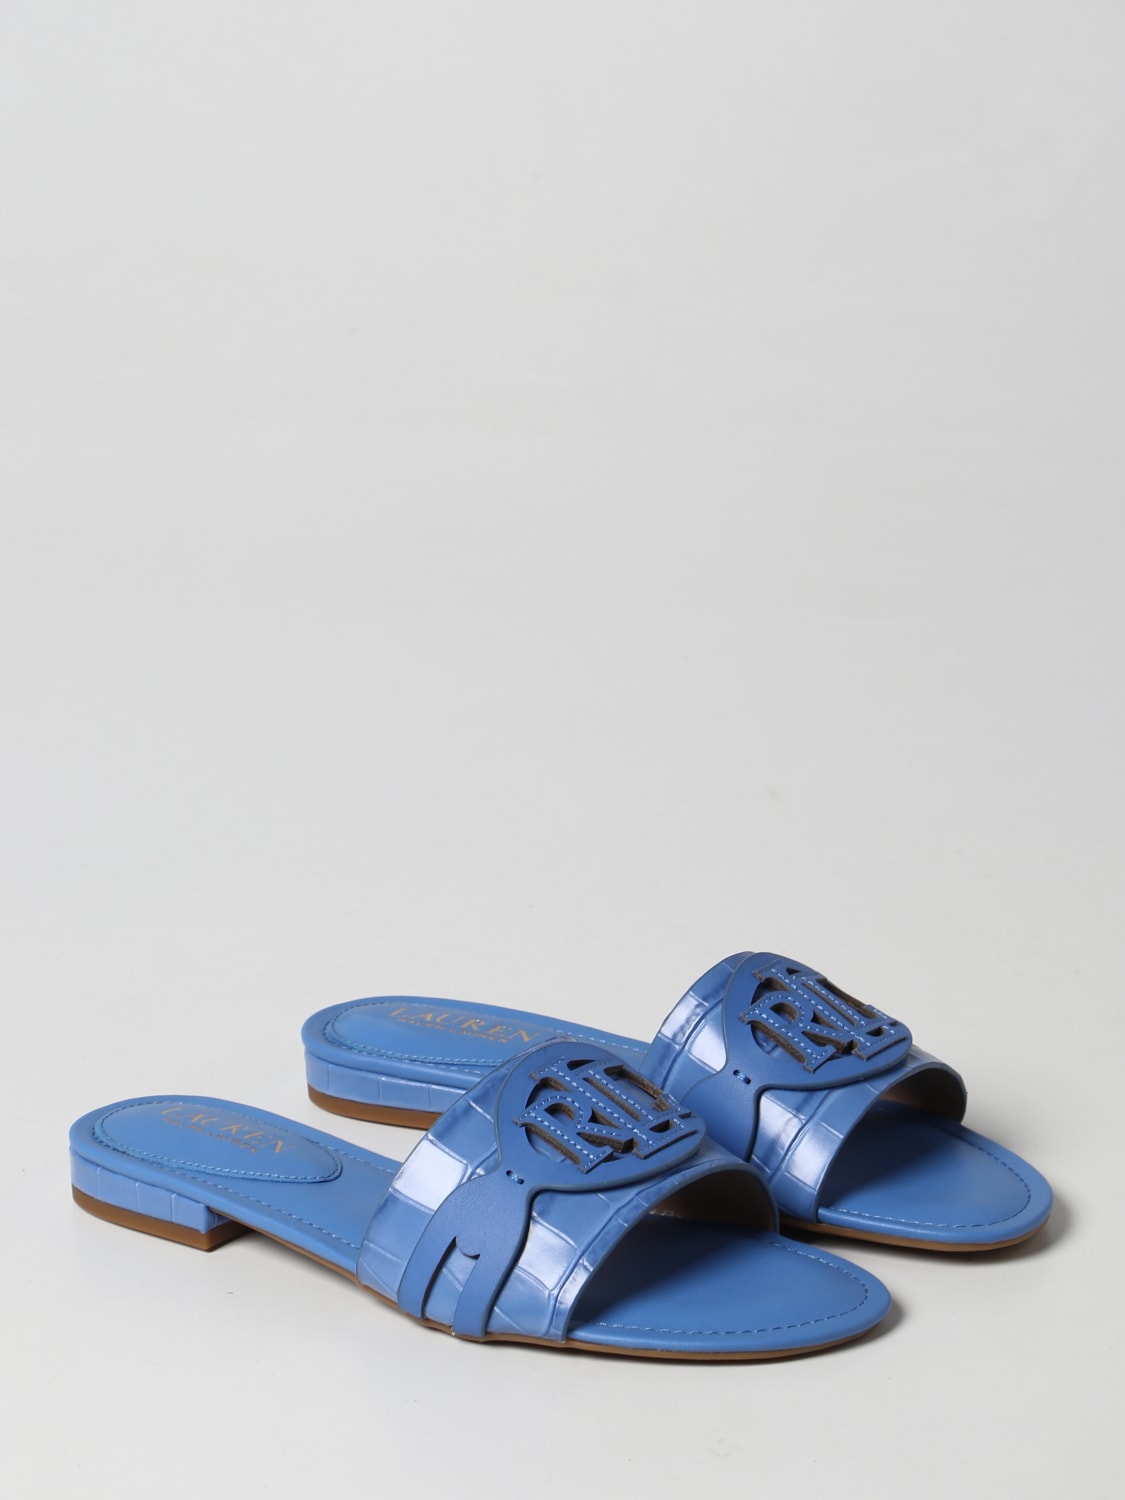 Lauren Ralph Lauren Outlet: flat sandals for woman - Gnawed Blue